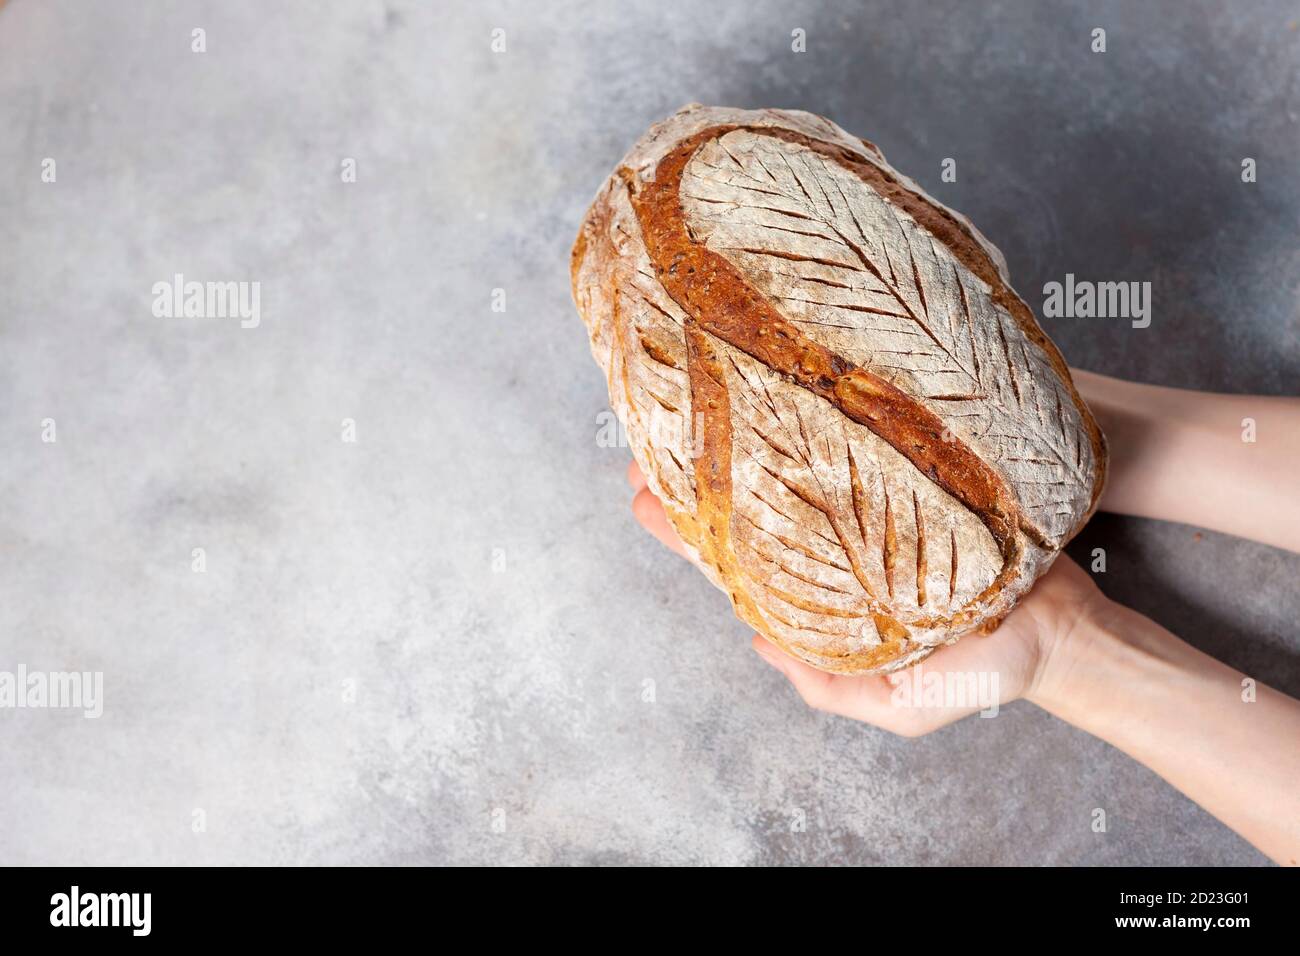 Sourdough bread. Freshly baked organic wheat bread. Child holding fresh round bread. Stock Photo